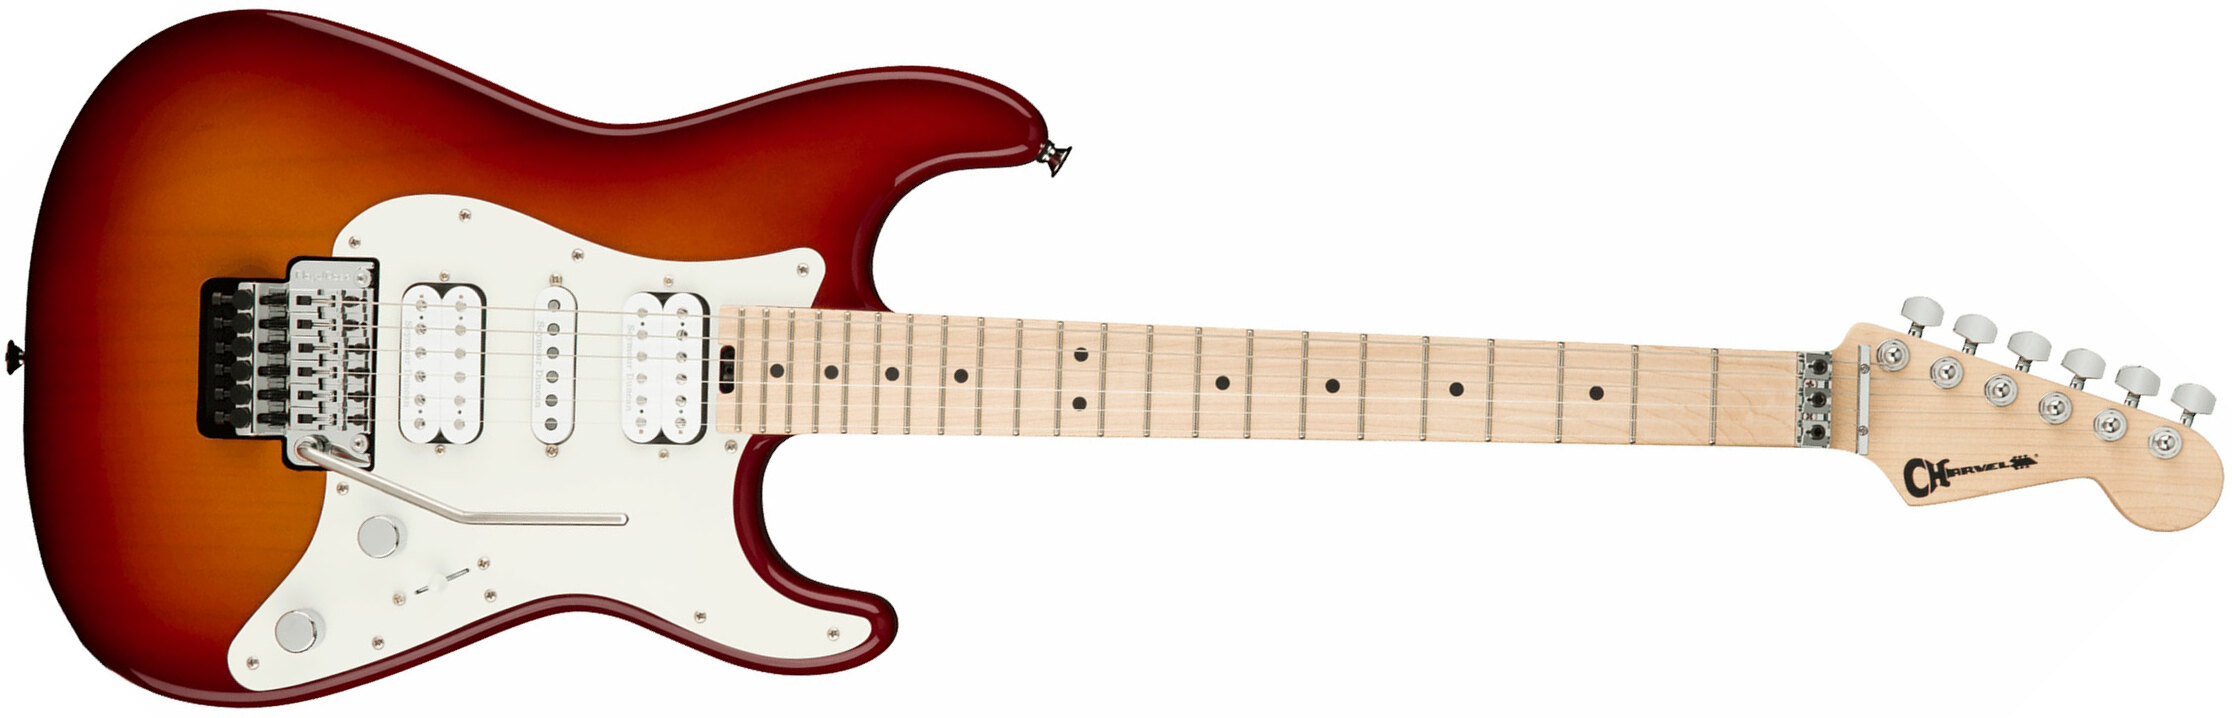 Charvel So-cal Style 1 Hsh  Fr M Pro-mod Seymour Duncan Mn - Cherry Kiss Burst - Str shape electric guitar - Main picture